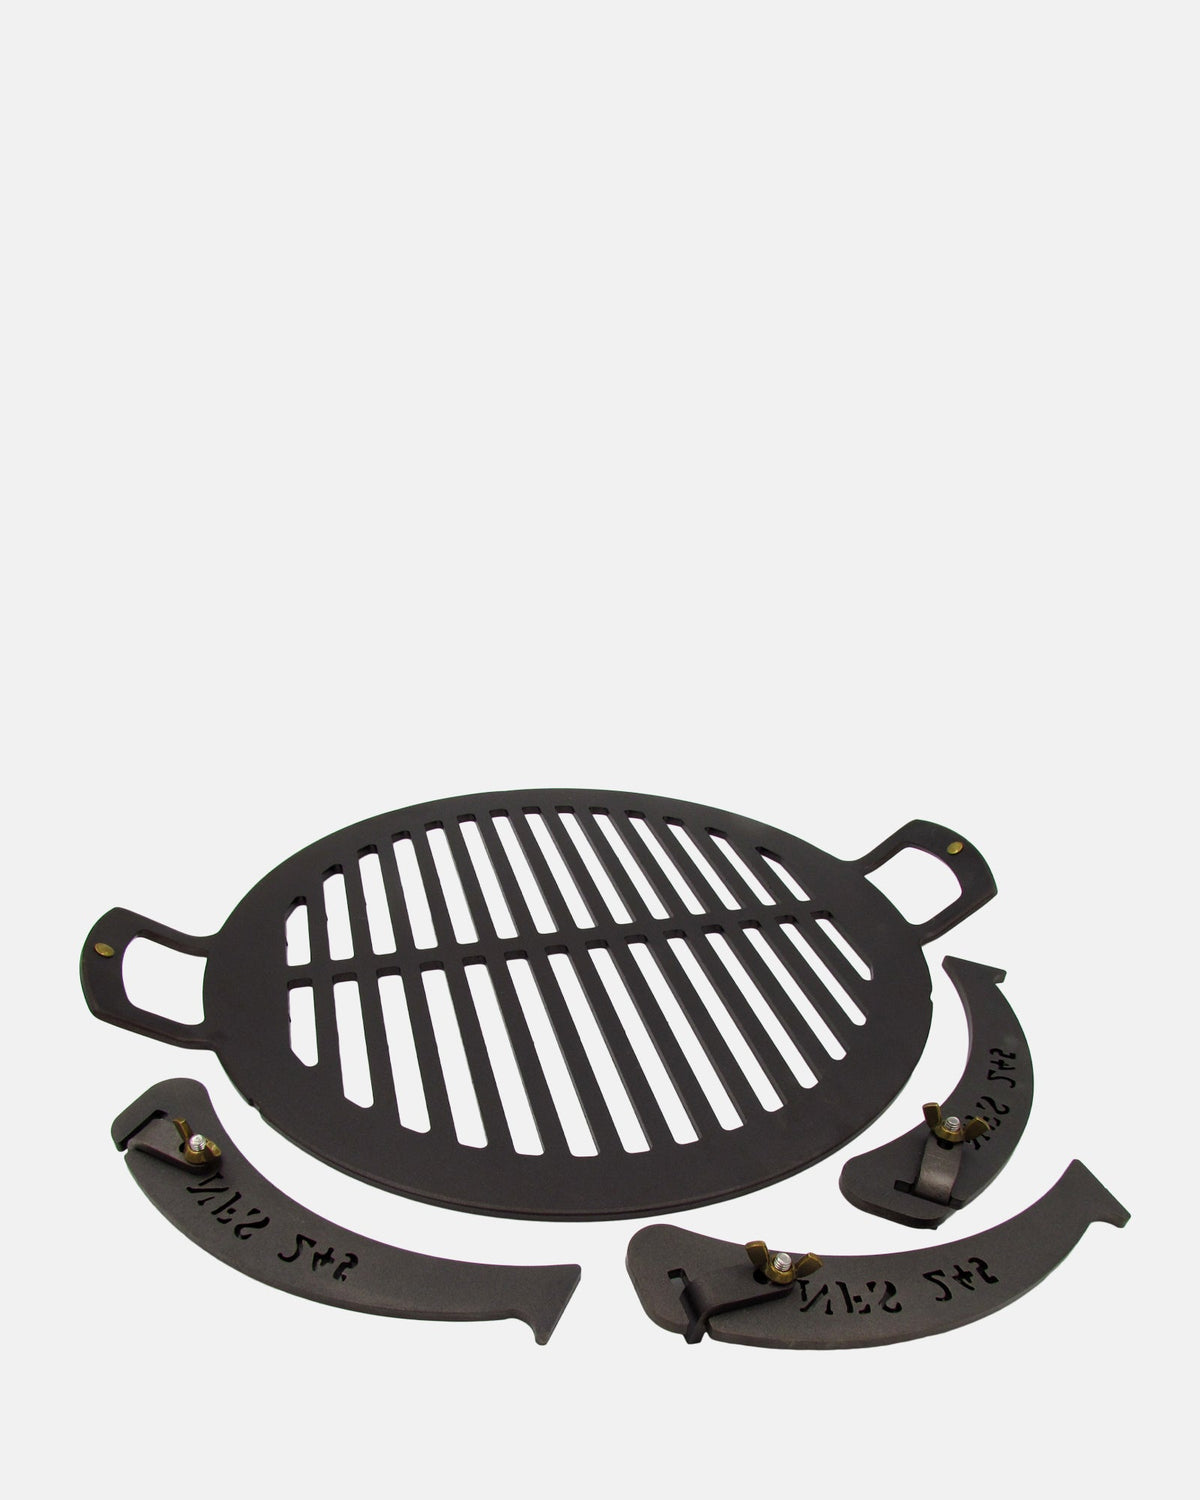 Black Iron 15 inch barbecue chapa - BRIT LOCKER